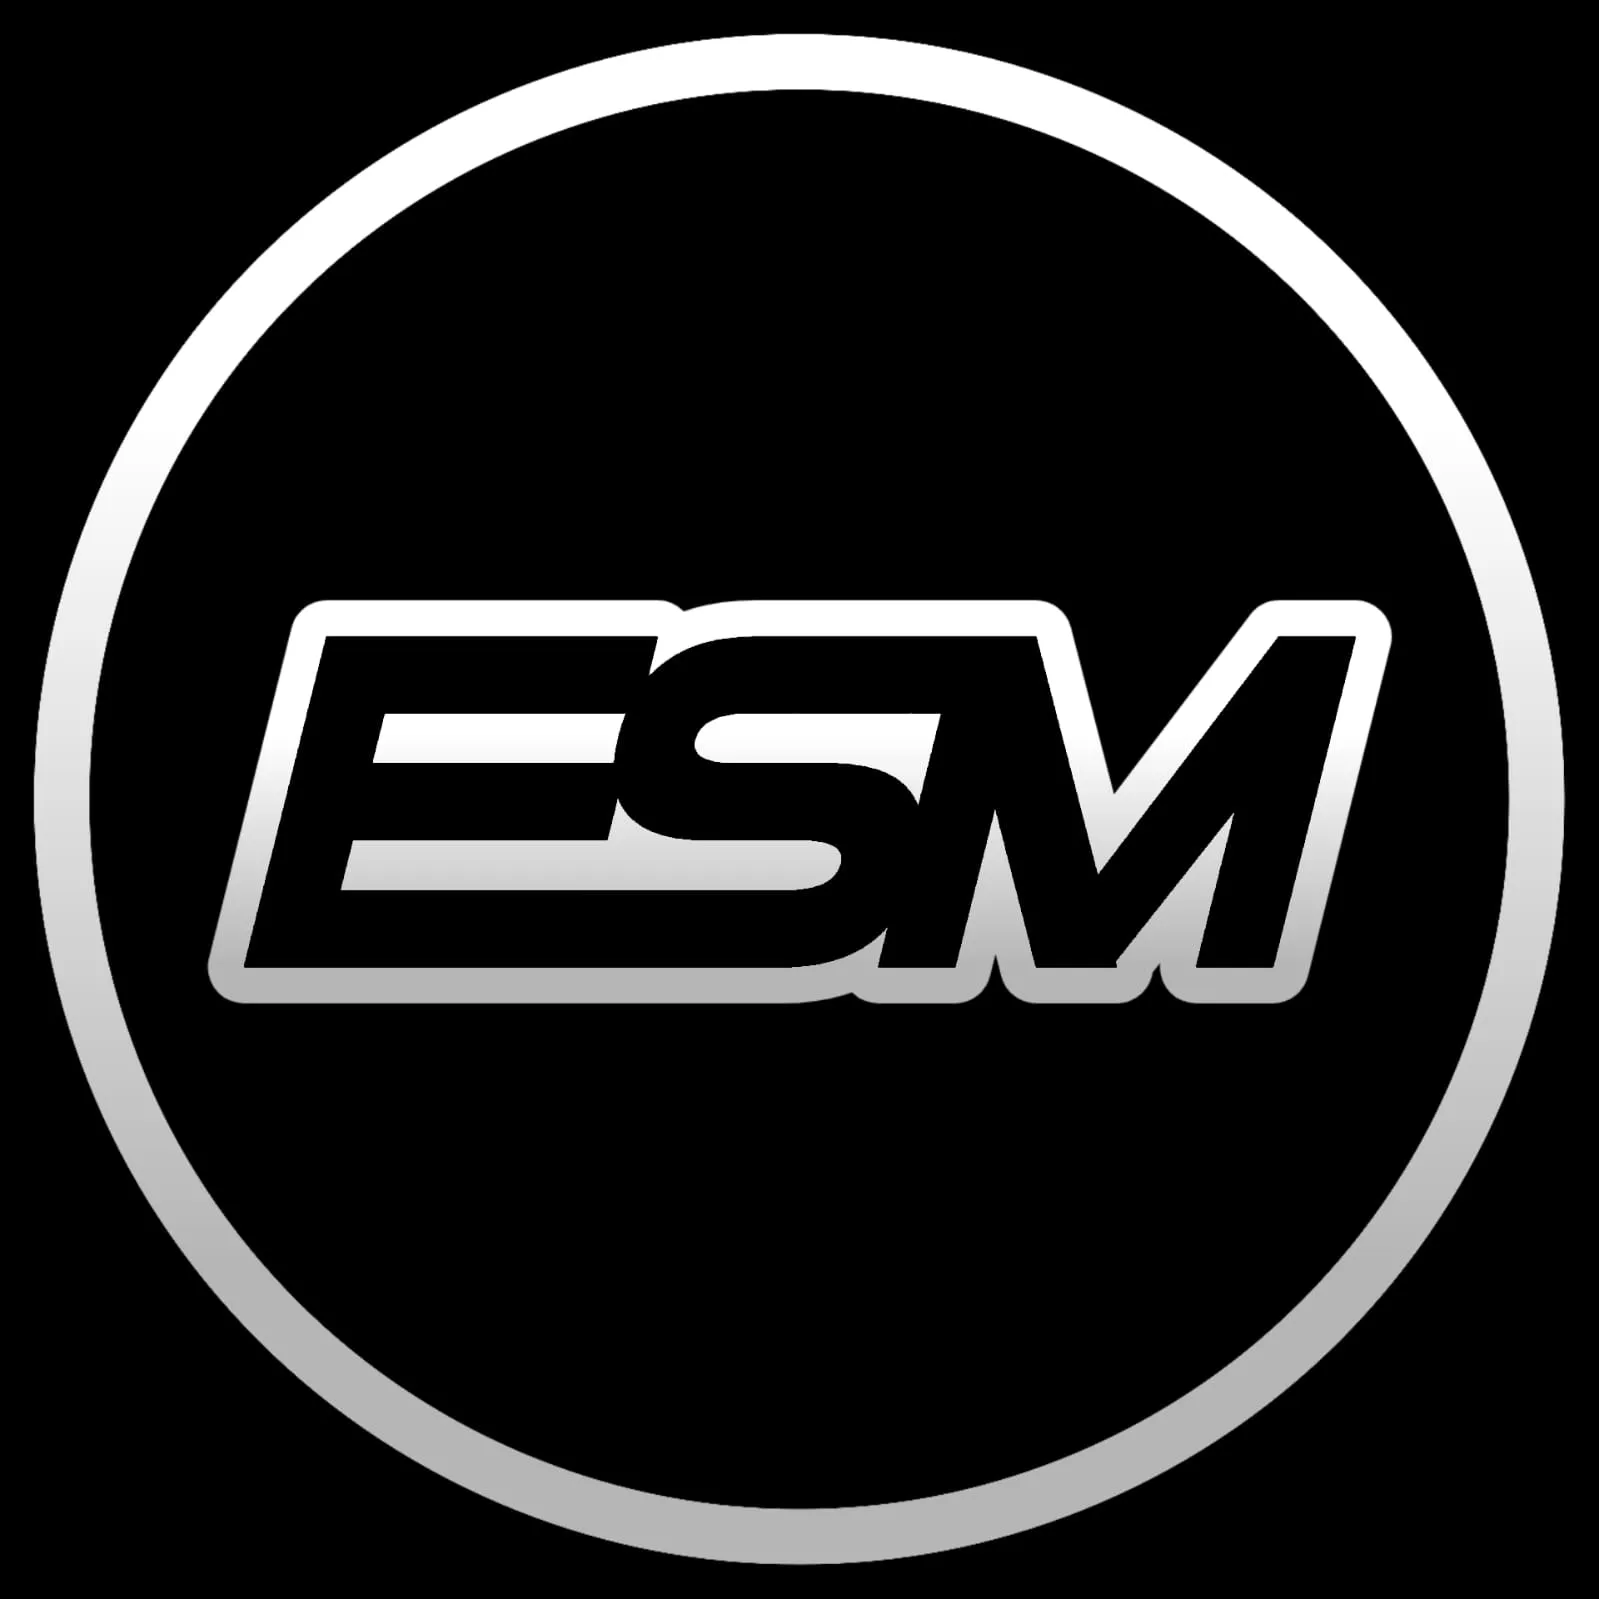 Empire Sports logo.